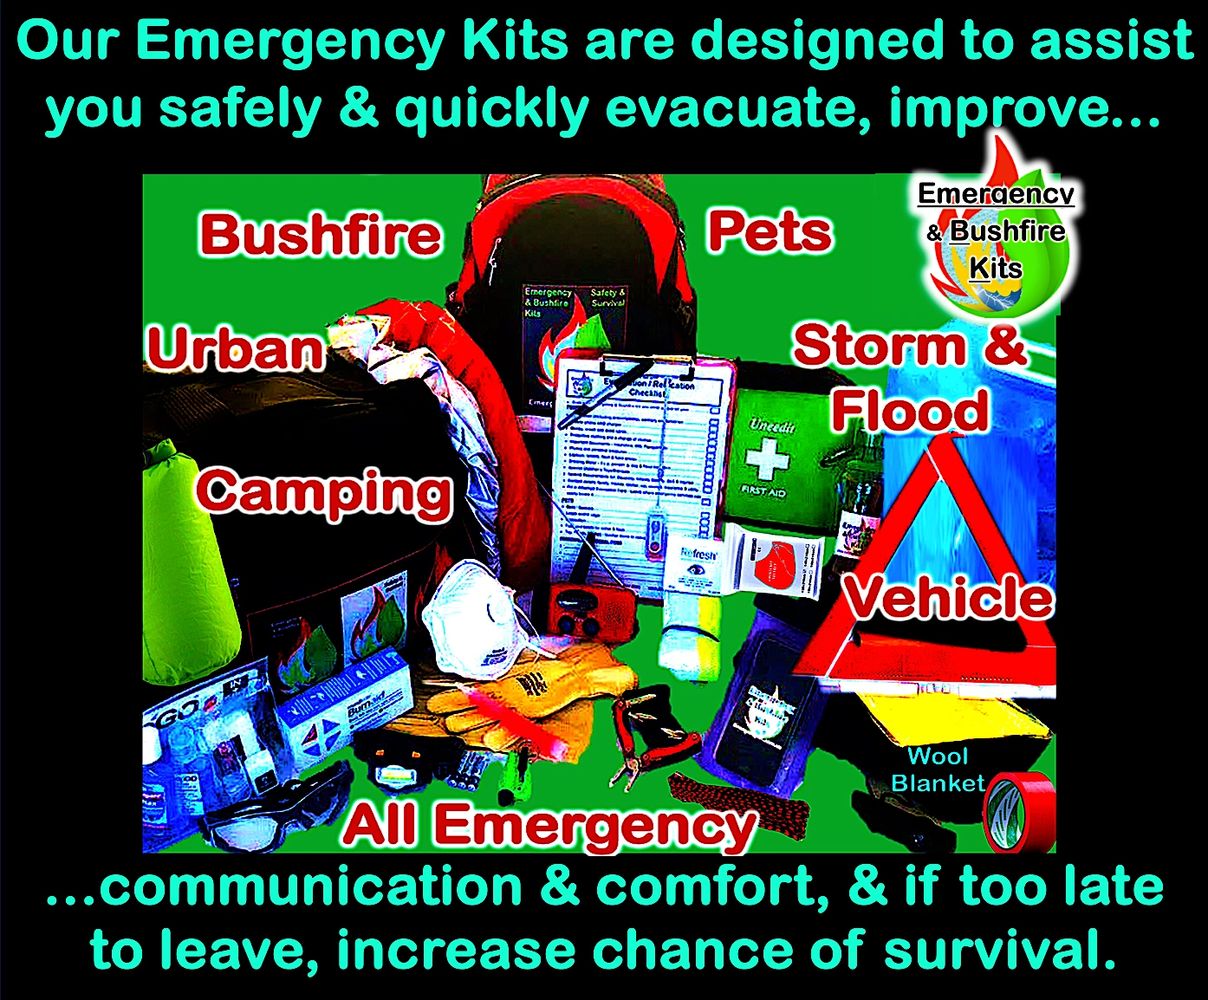 Survival Kits, emergency kits, bushfire kits, fire blankets, safety equipment, evacuation gear, ebk